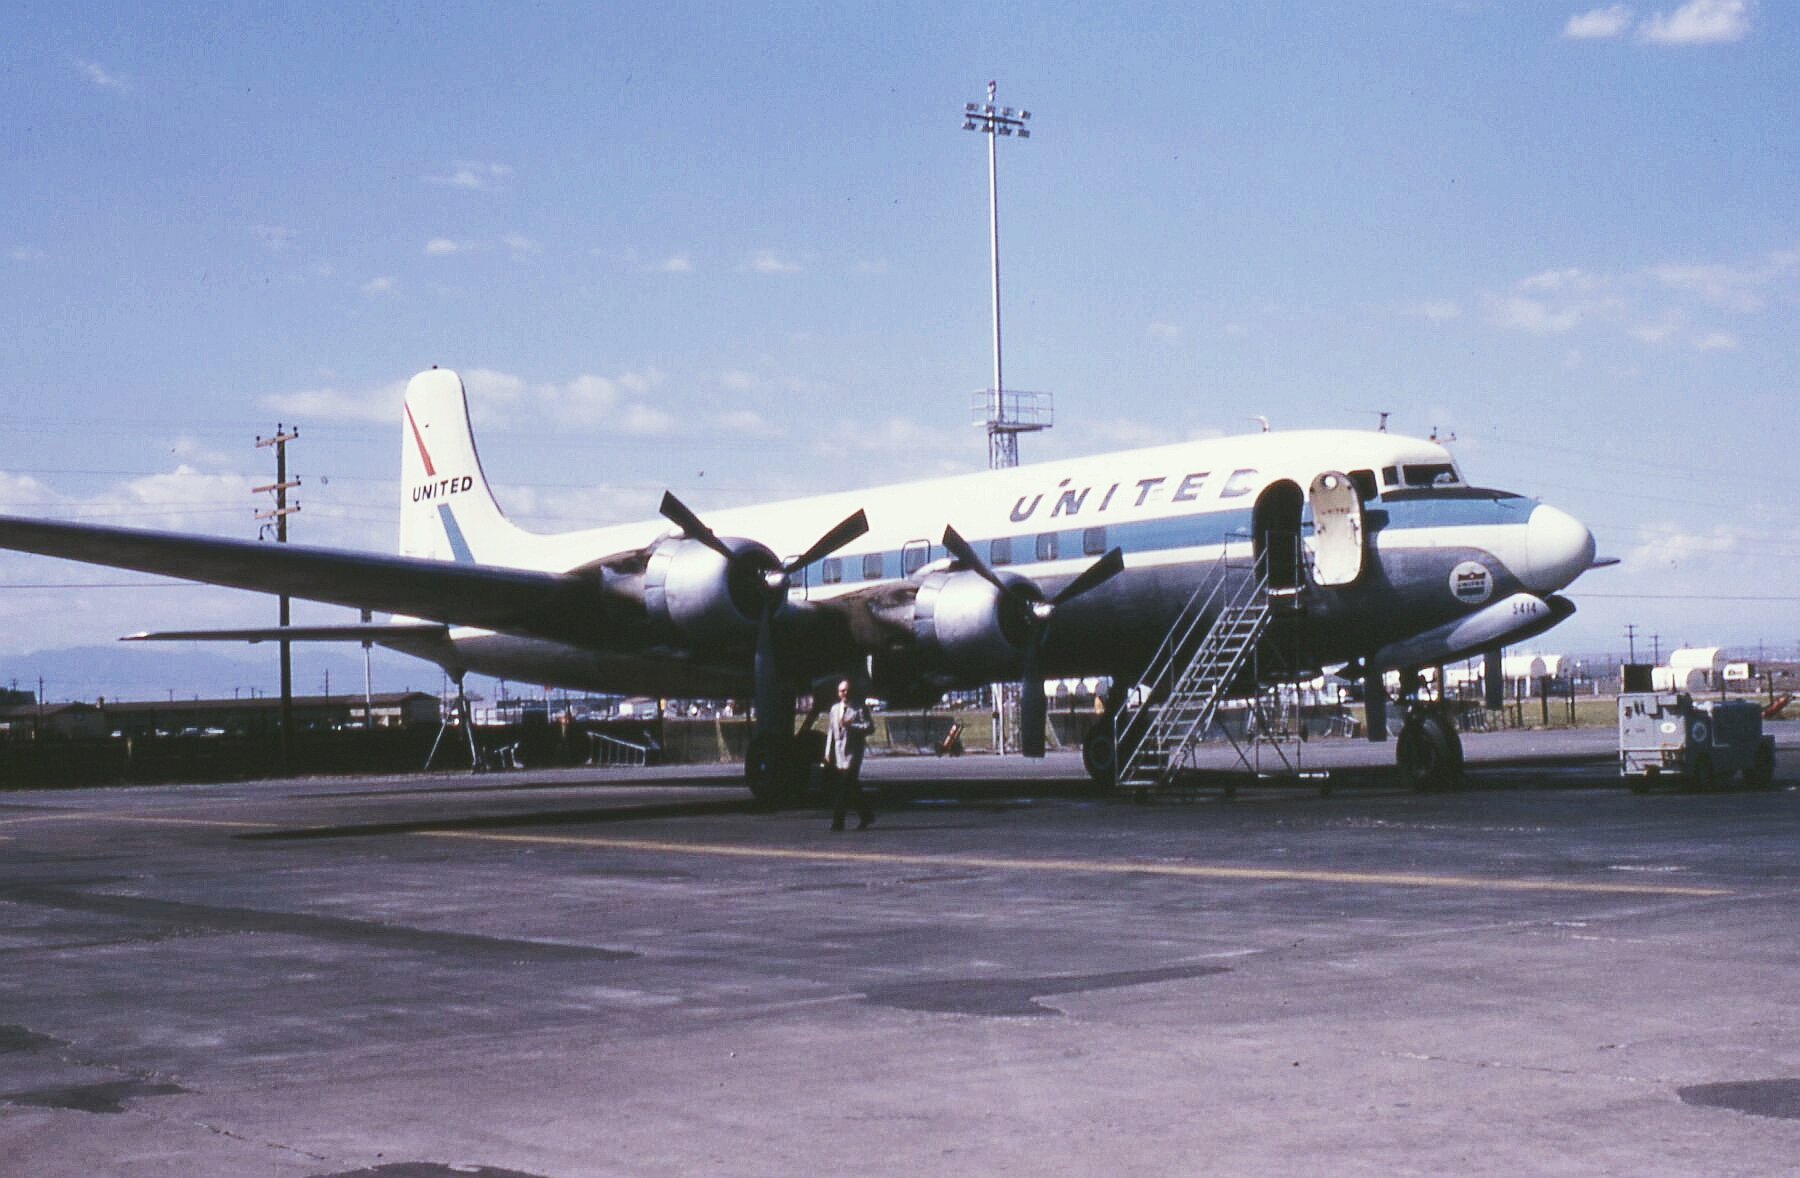 Douglas DC-6 next